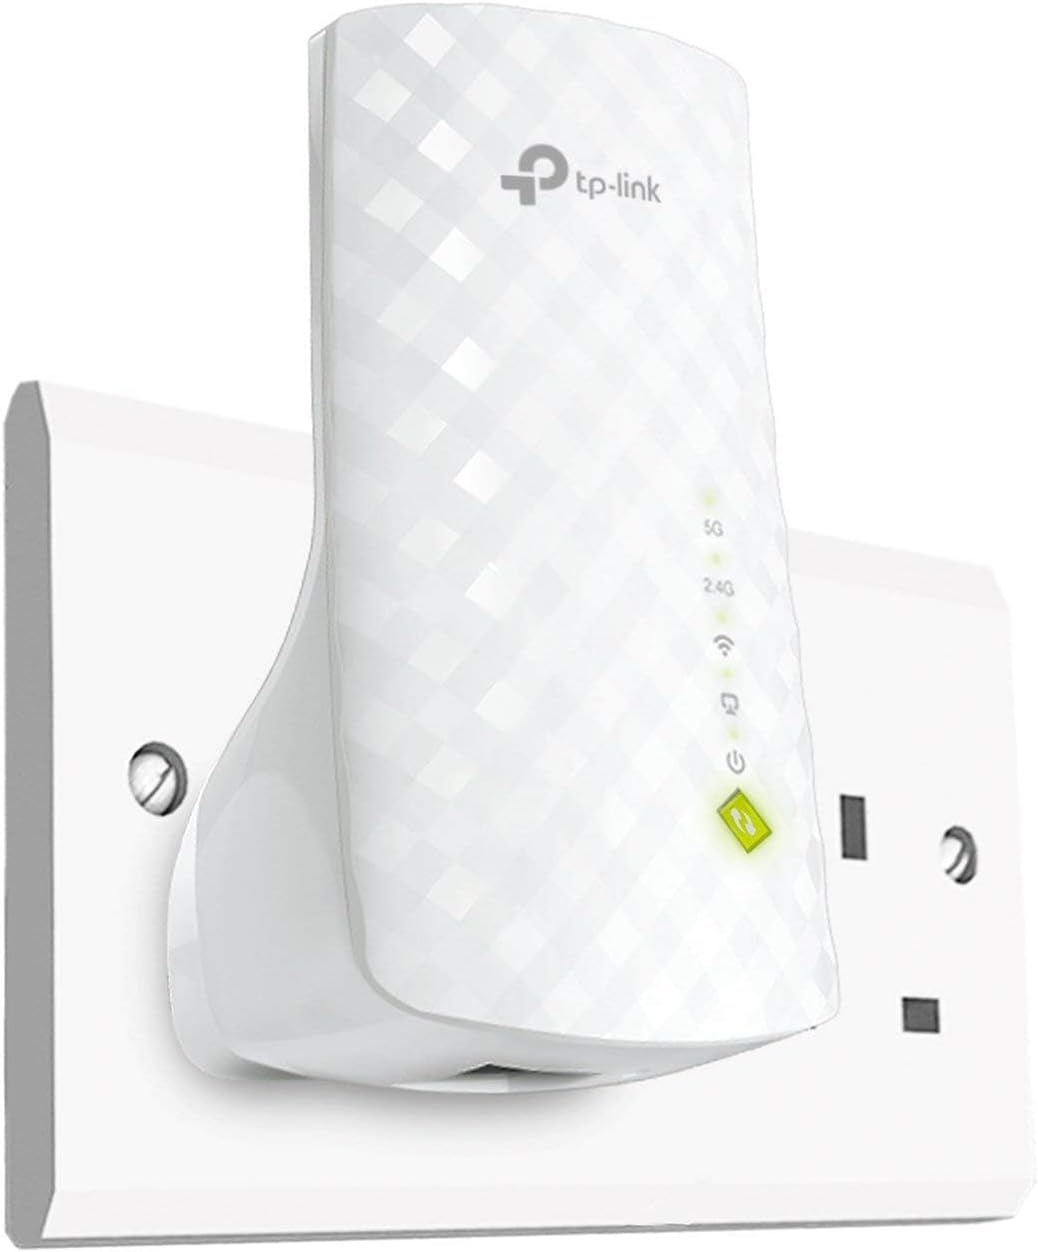 توسعه دهنده شبکه بی سیم تی پی لینک مدل Tp-Link Ac750 Wifi Extender - ارسال 10 الی 15 روز کاری